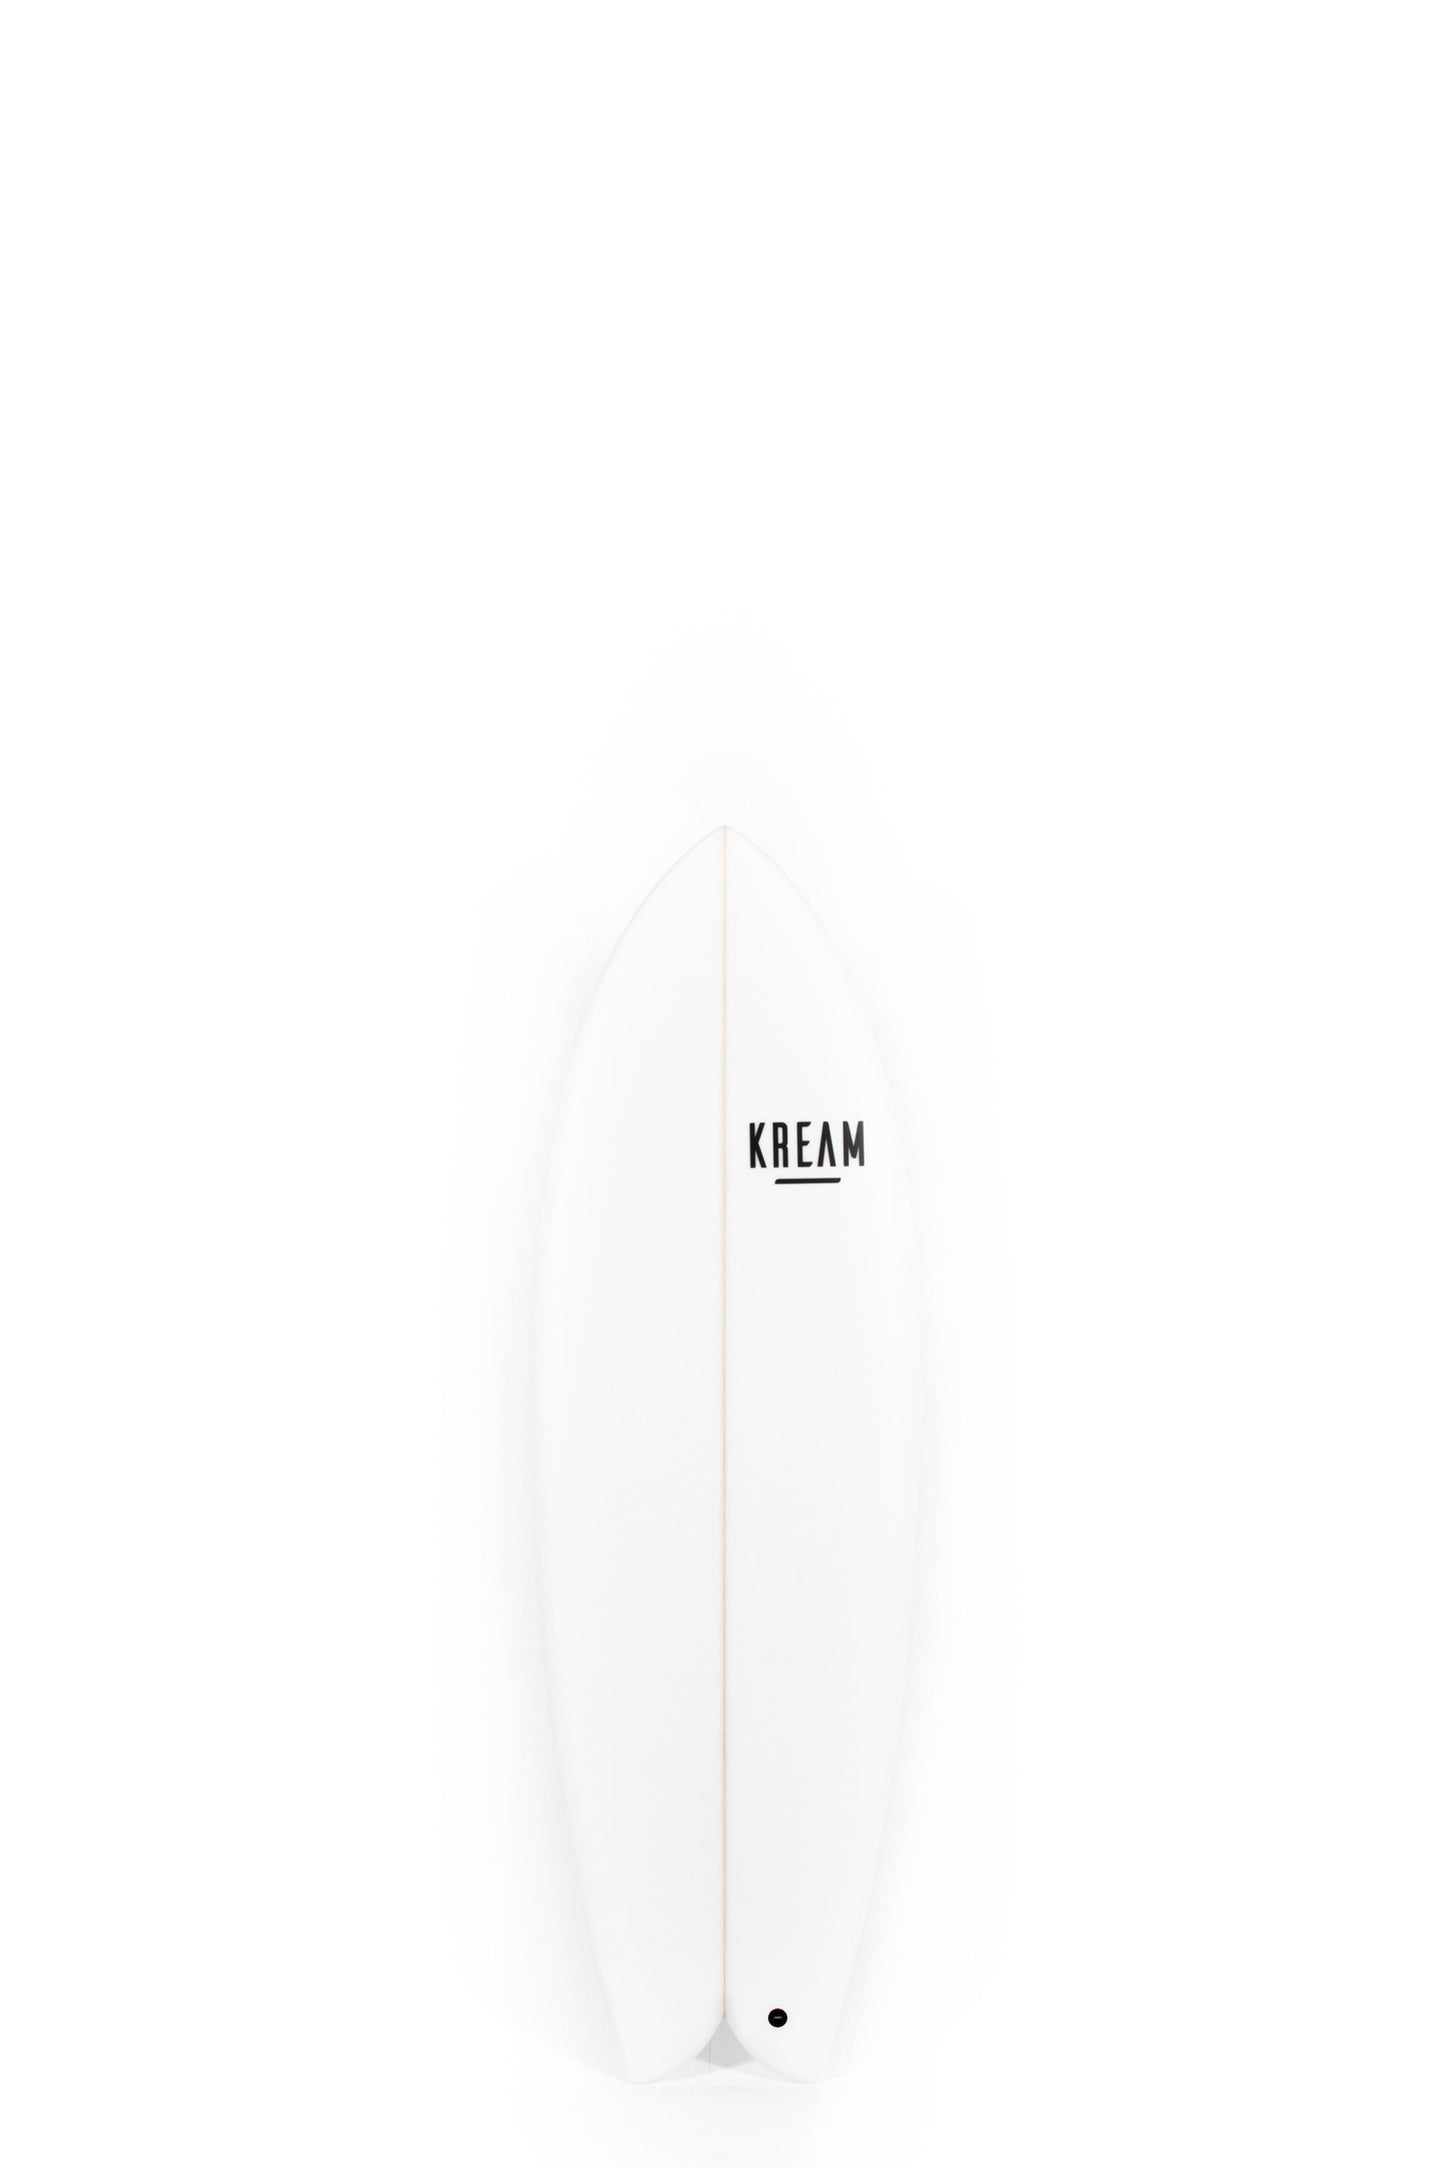 Pukas Surf Shop - Kream Surfboards - FISH - 5'6" - 20 3/4 - 2 7/16 - 32.07L